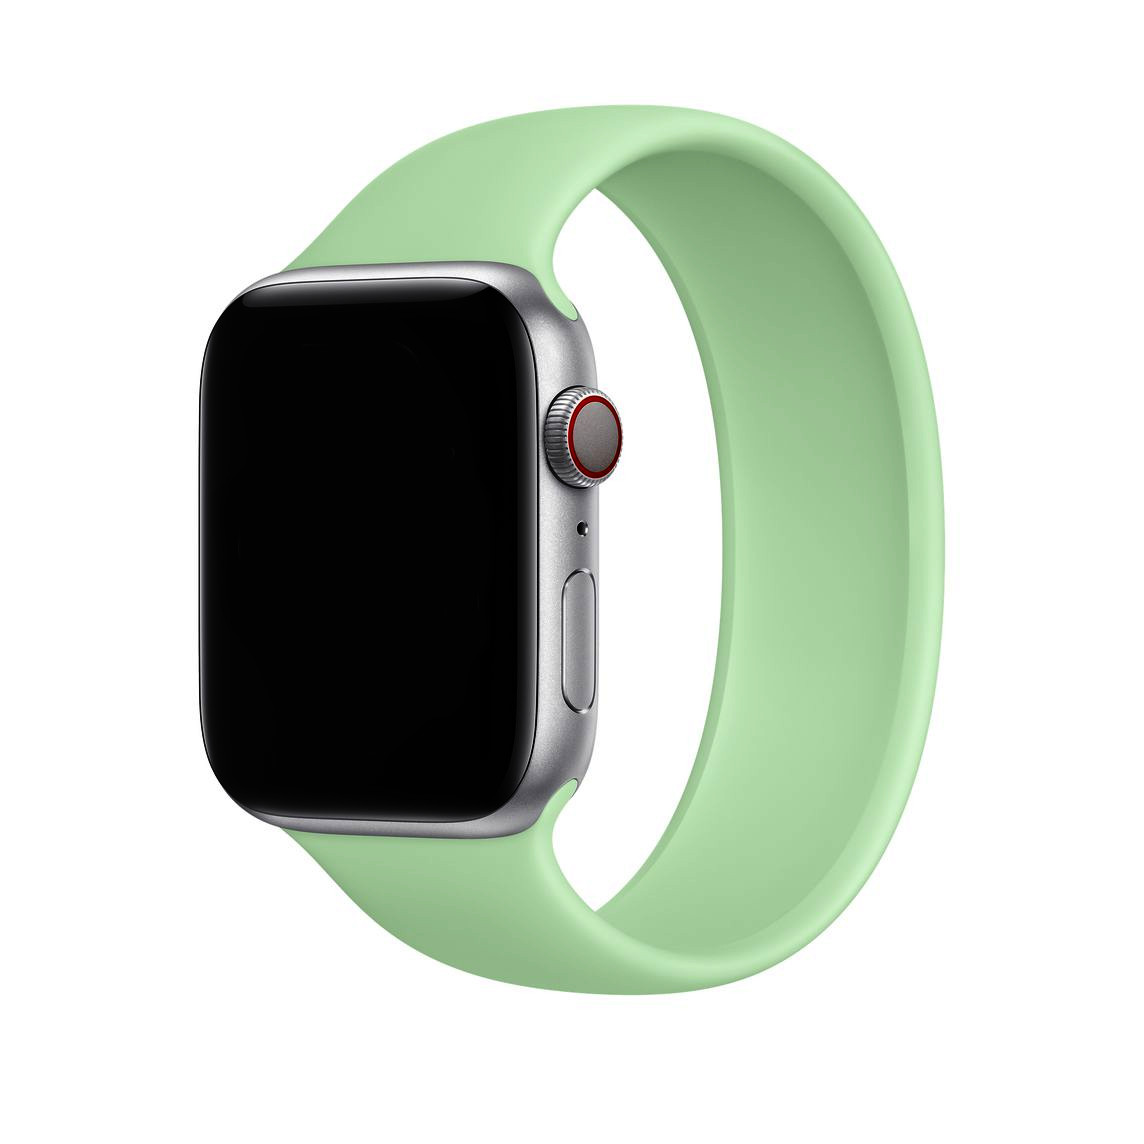 Řemínek iMore Solo Loop Apple Watch Series 1/2/3 42mm - Pistáciová (S)